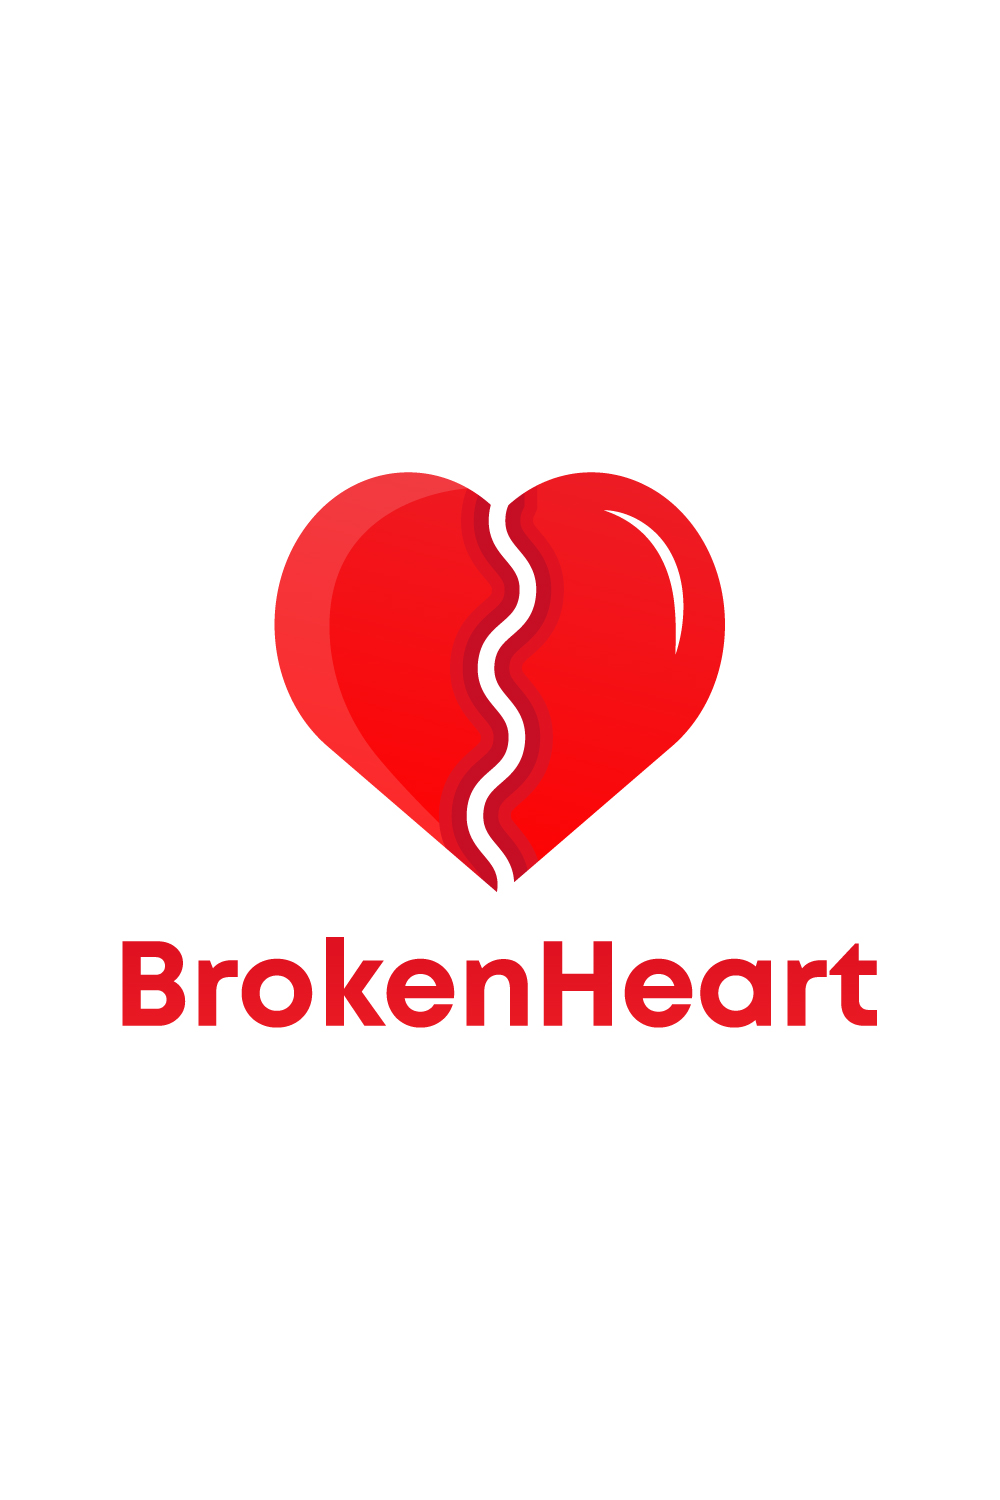 Broken Heart icon pinterest preview image.